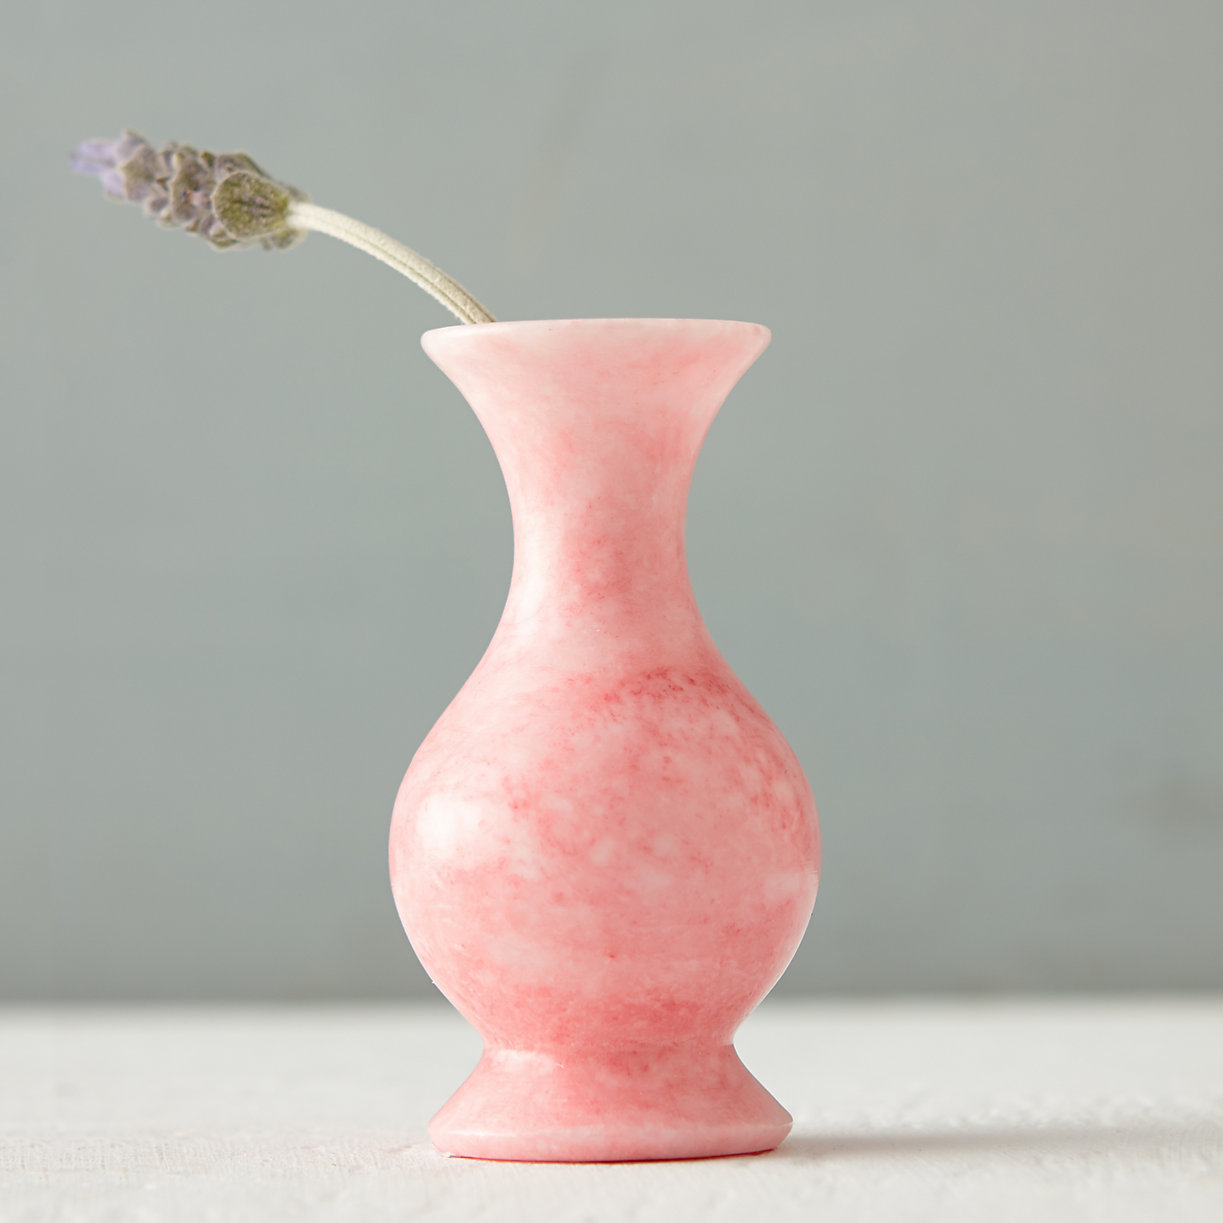 Pink bud vase from Terrain